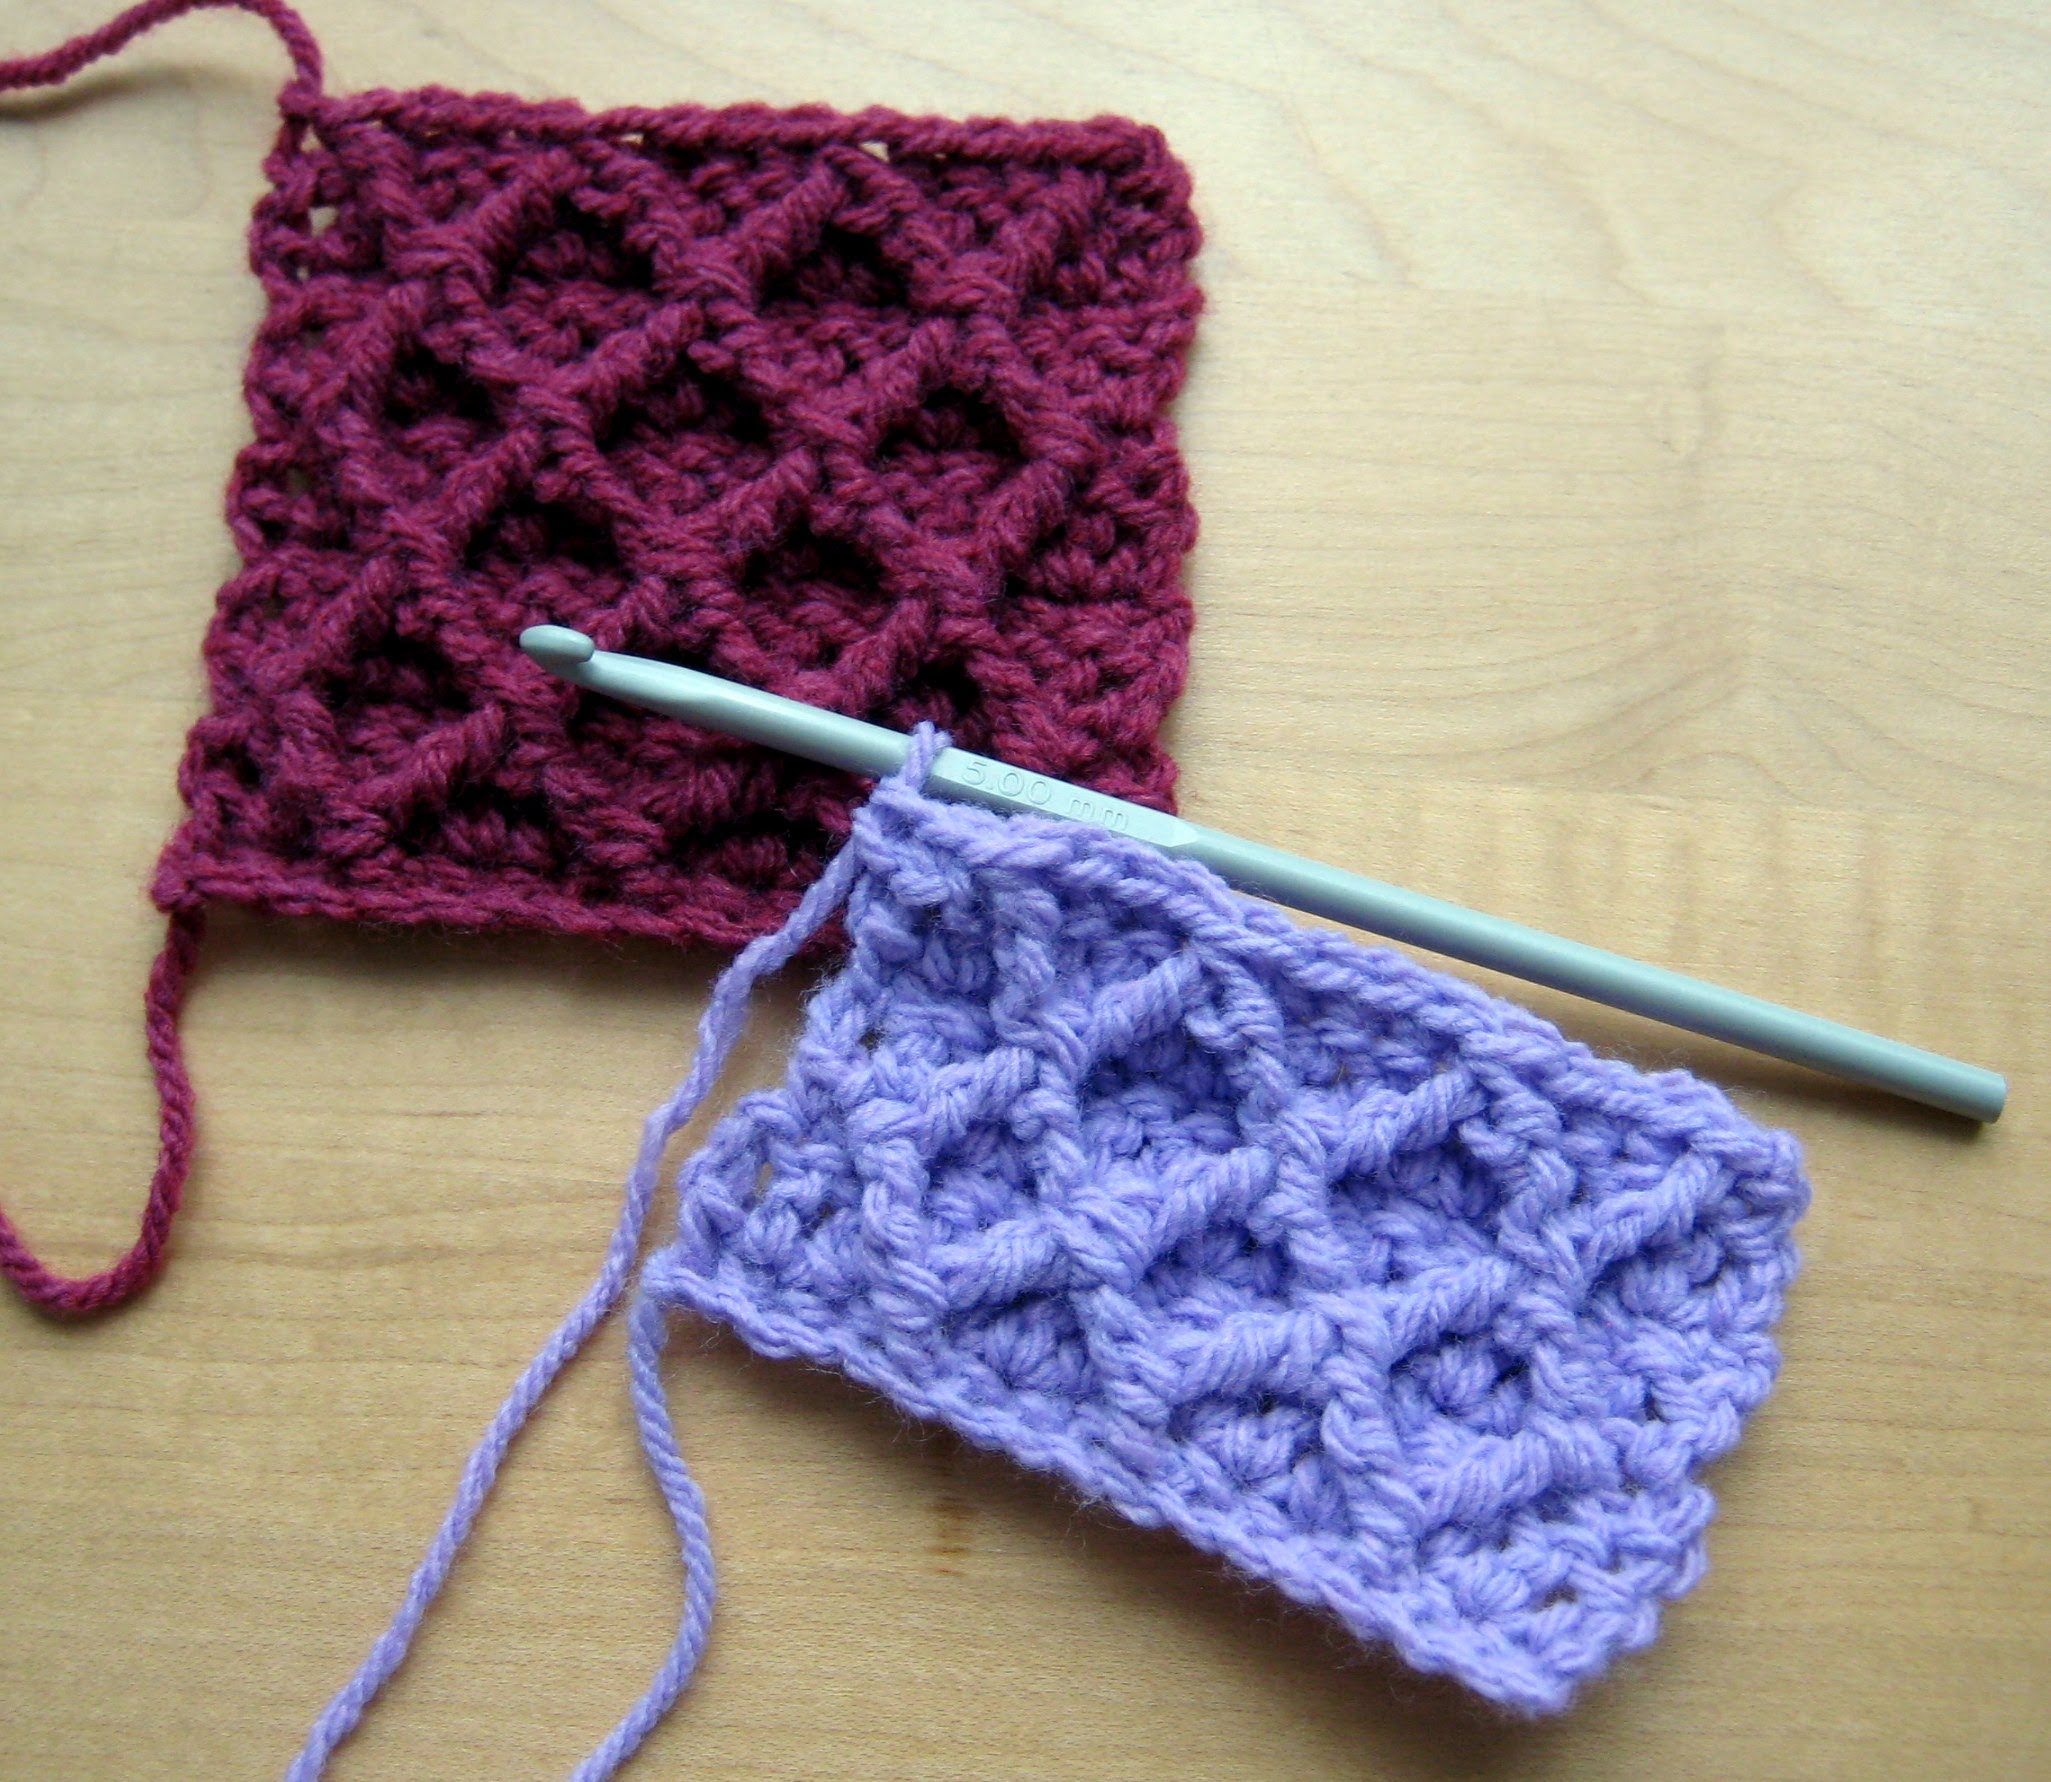 Crochet stitches – Catch the new Stitch – thefashiontamer.com